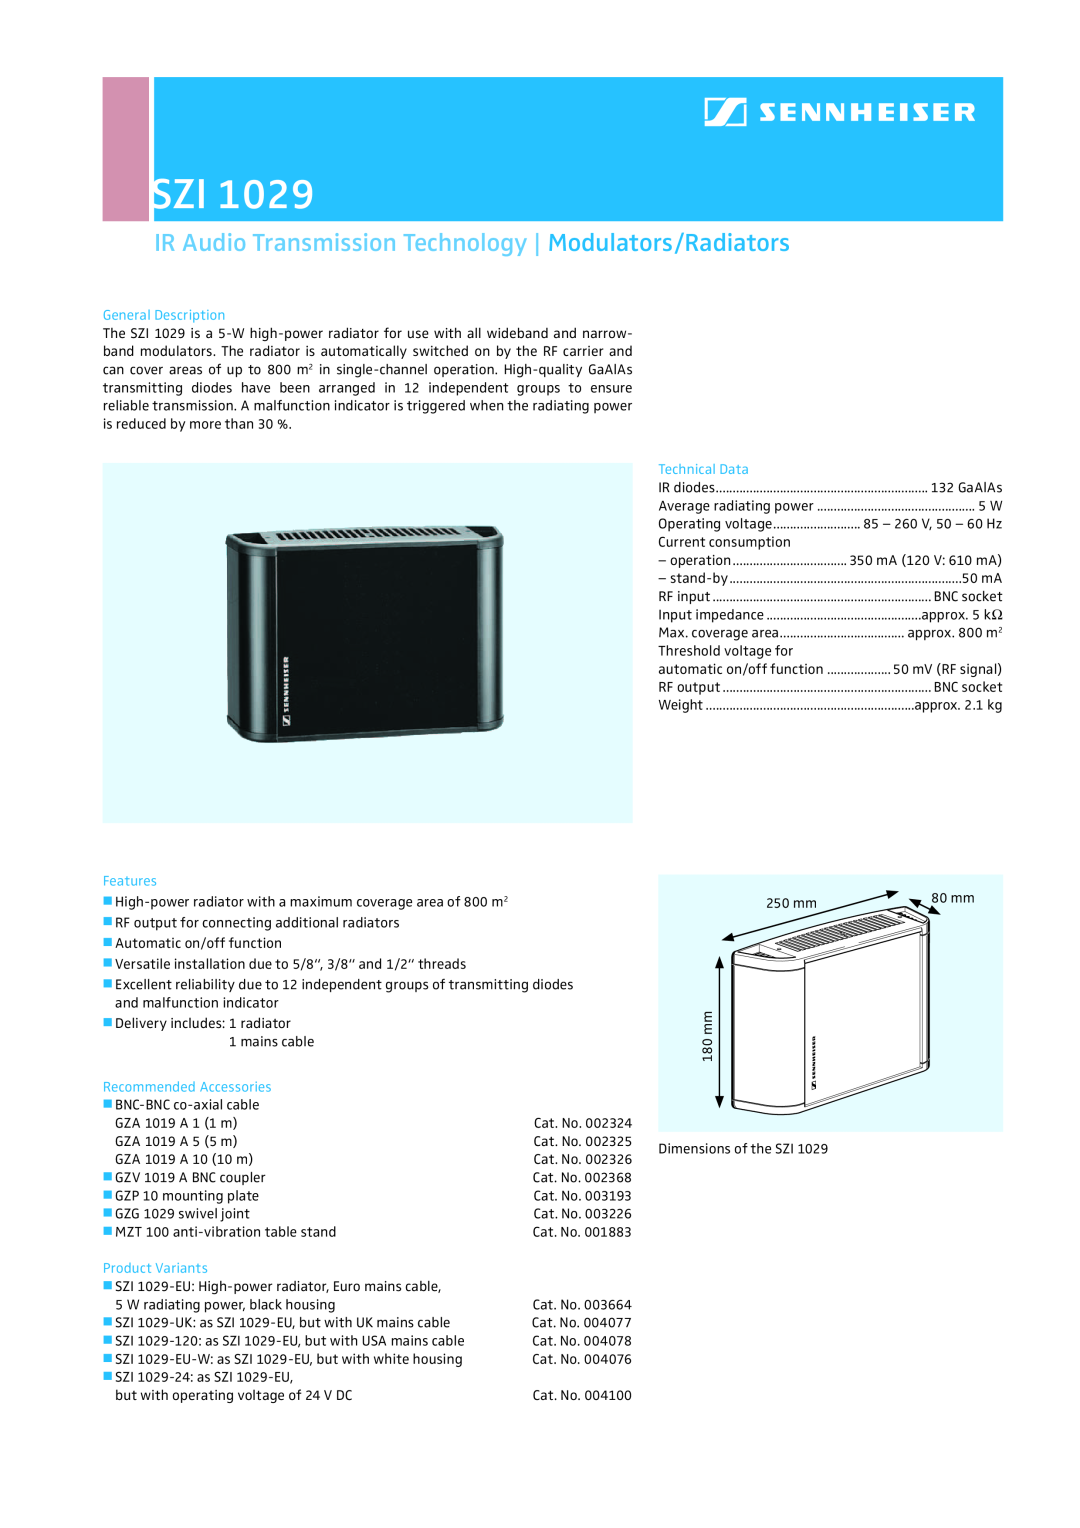 Sennheiser SZI 1029 dimensions General Description, Features, Recommended Accessories, Product Variants, Technical Data 